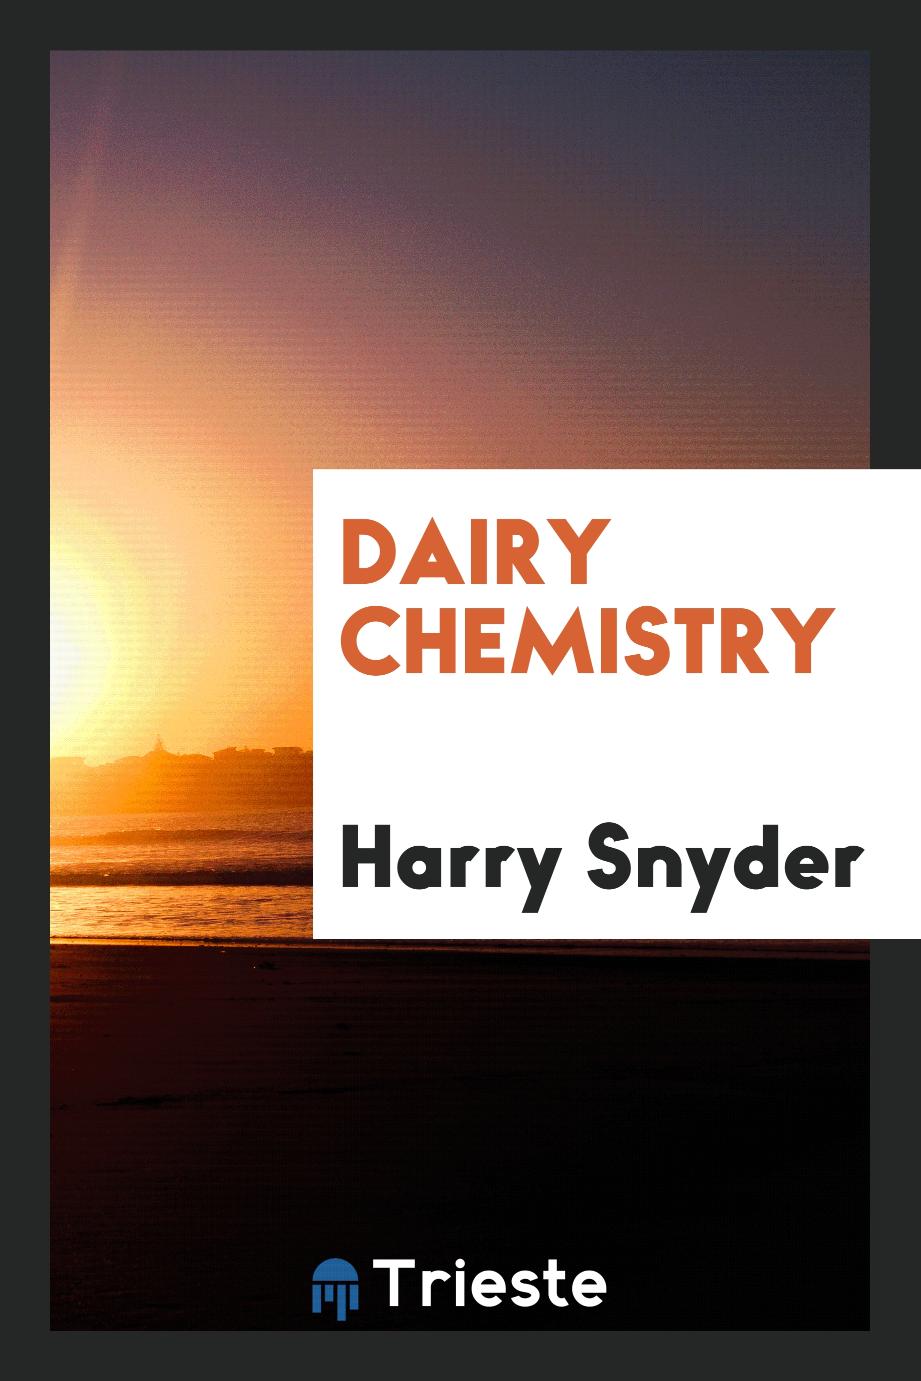 Dairy chemistry